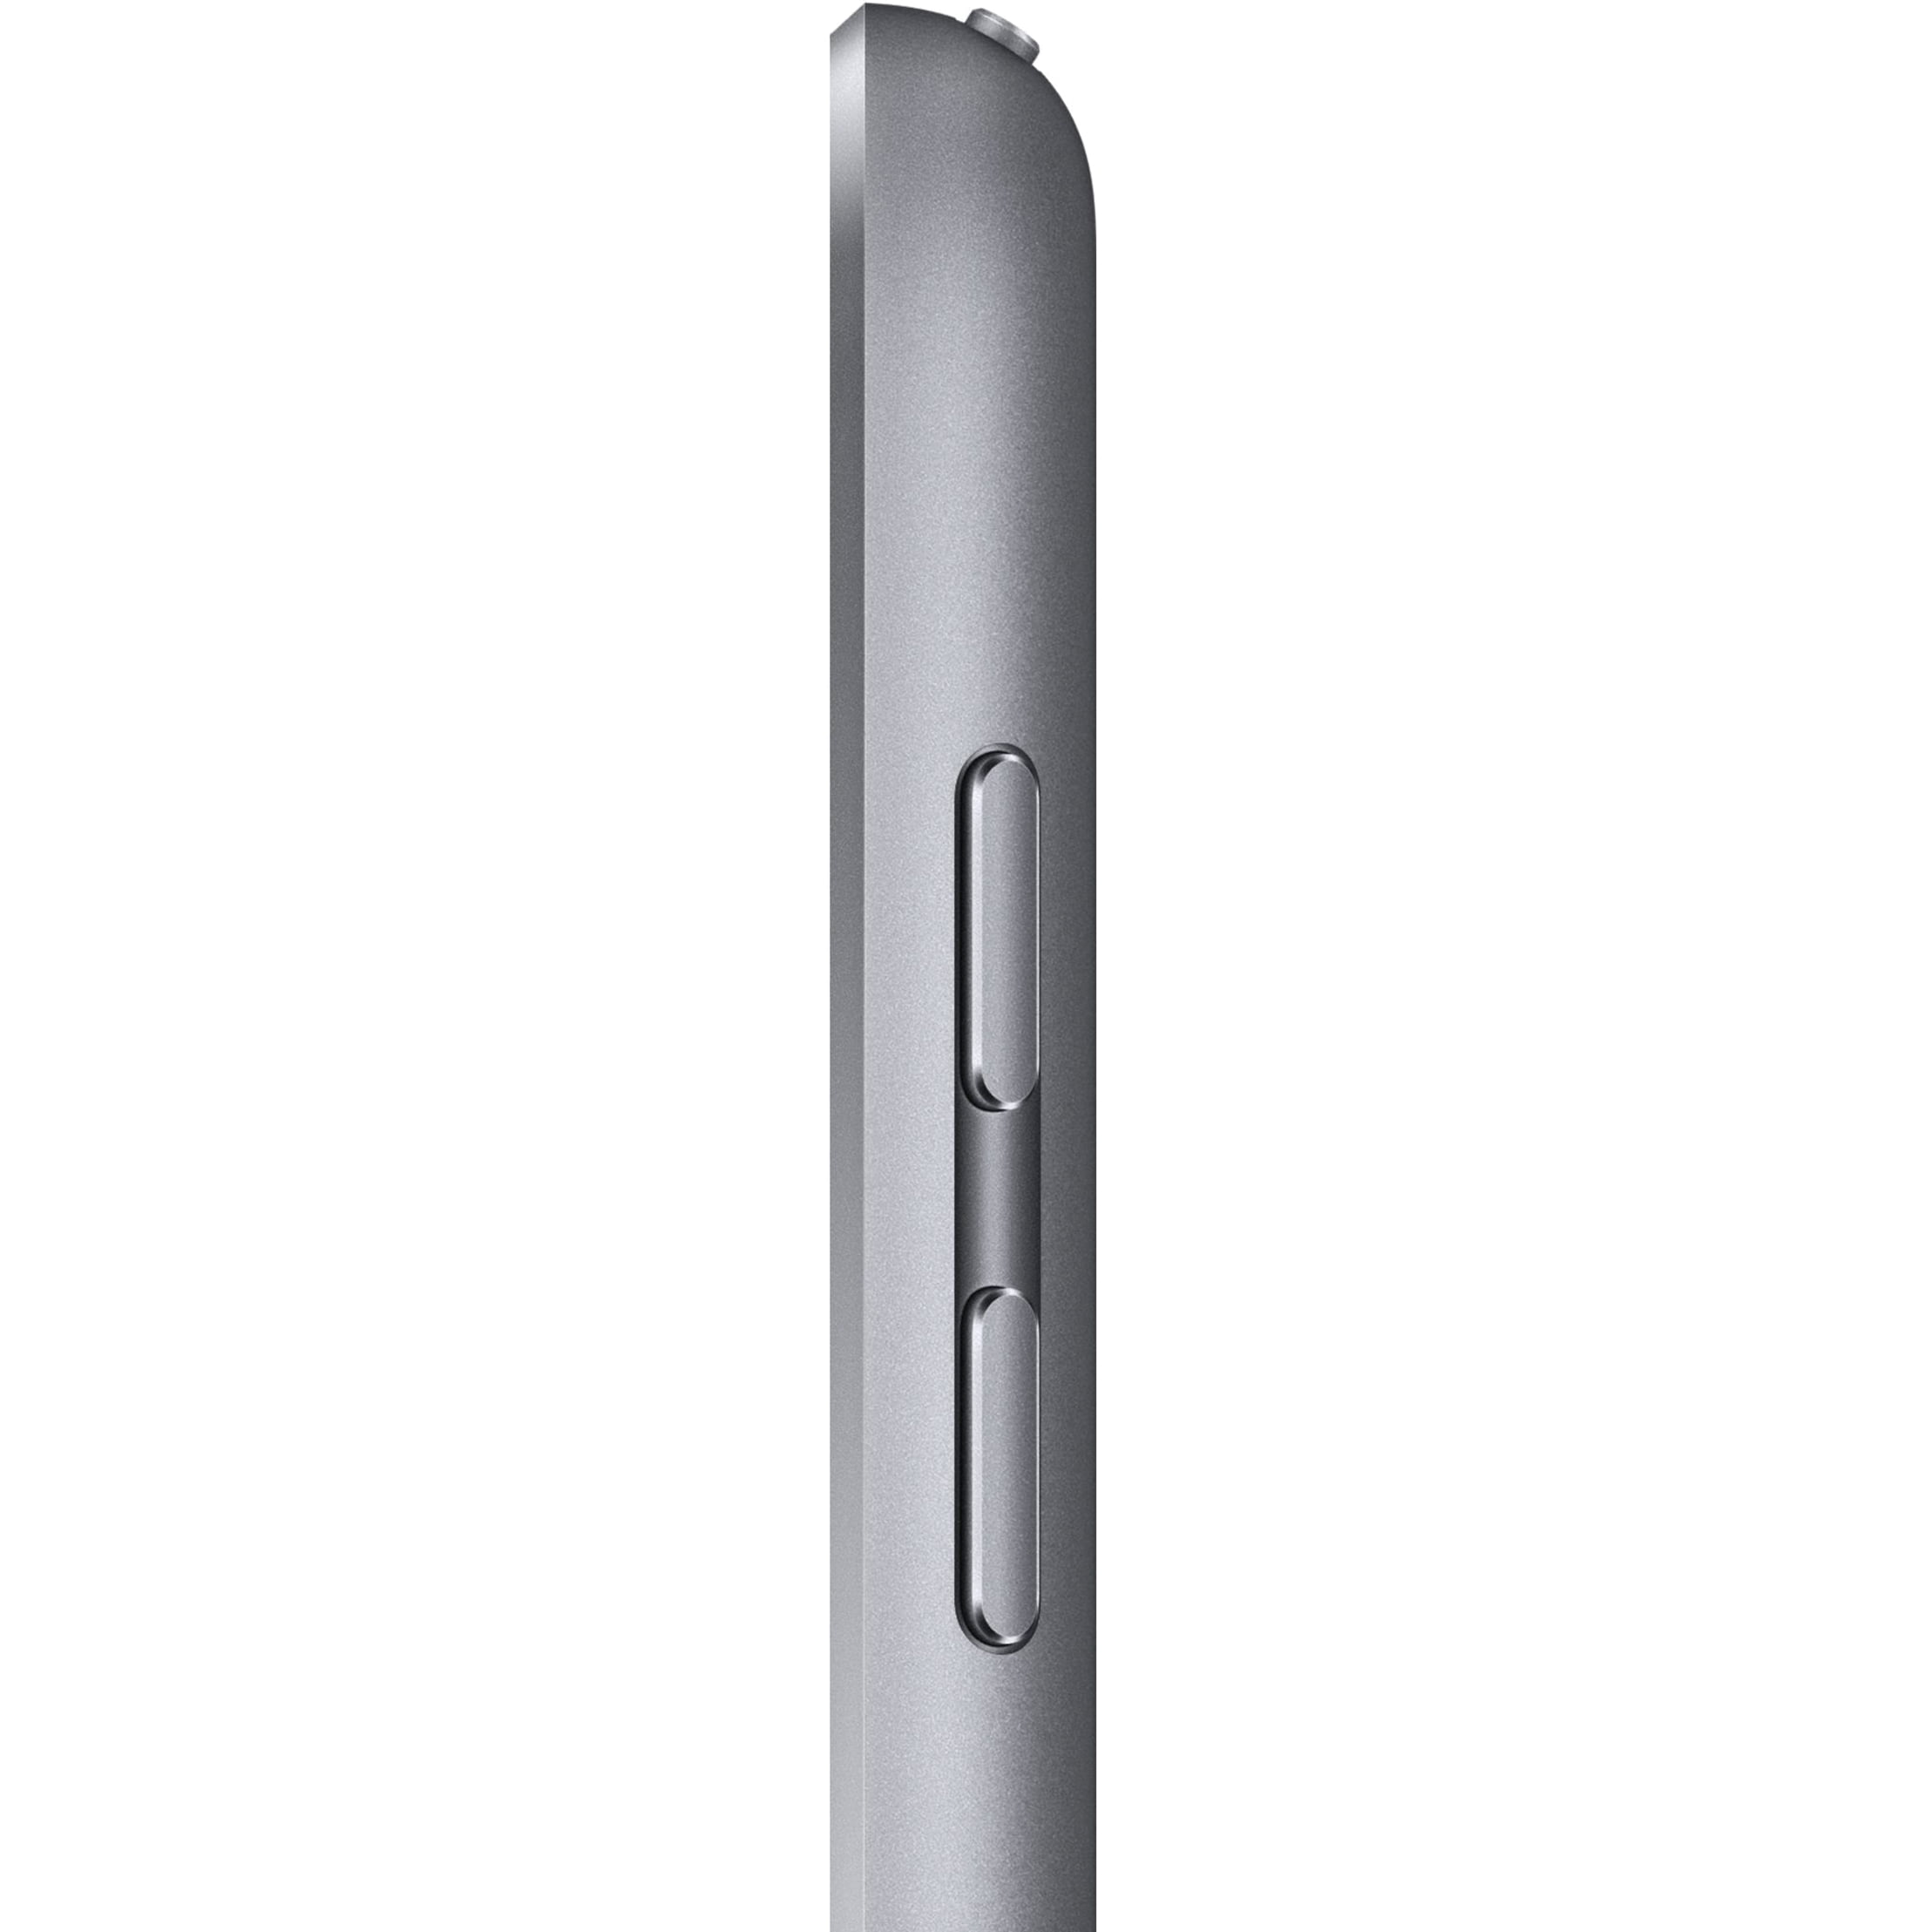 Apple iPad 9.7-inch Retina Display with WIFI, 32GB, Touch ID, 2017 Mode -  Space Gray (Renewed)